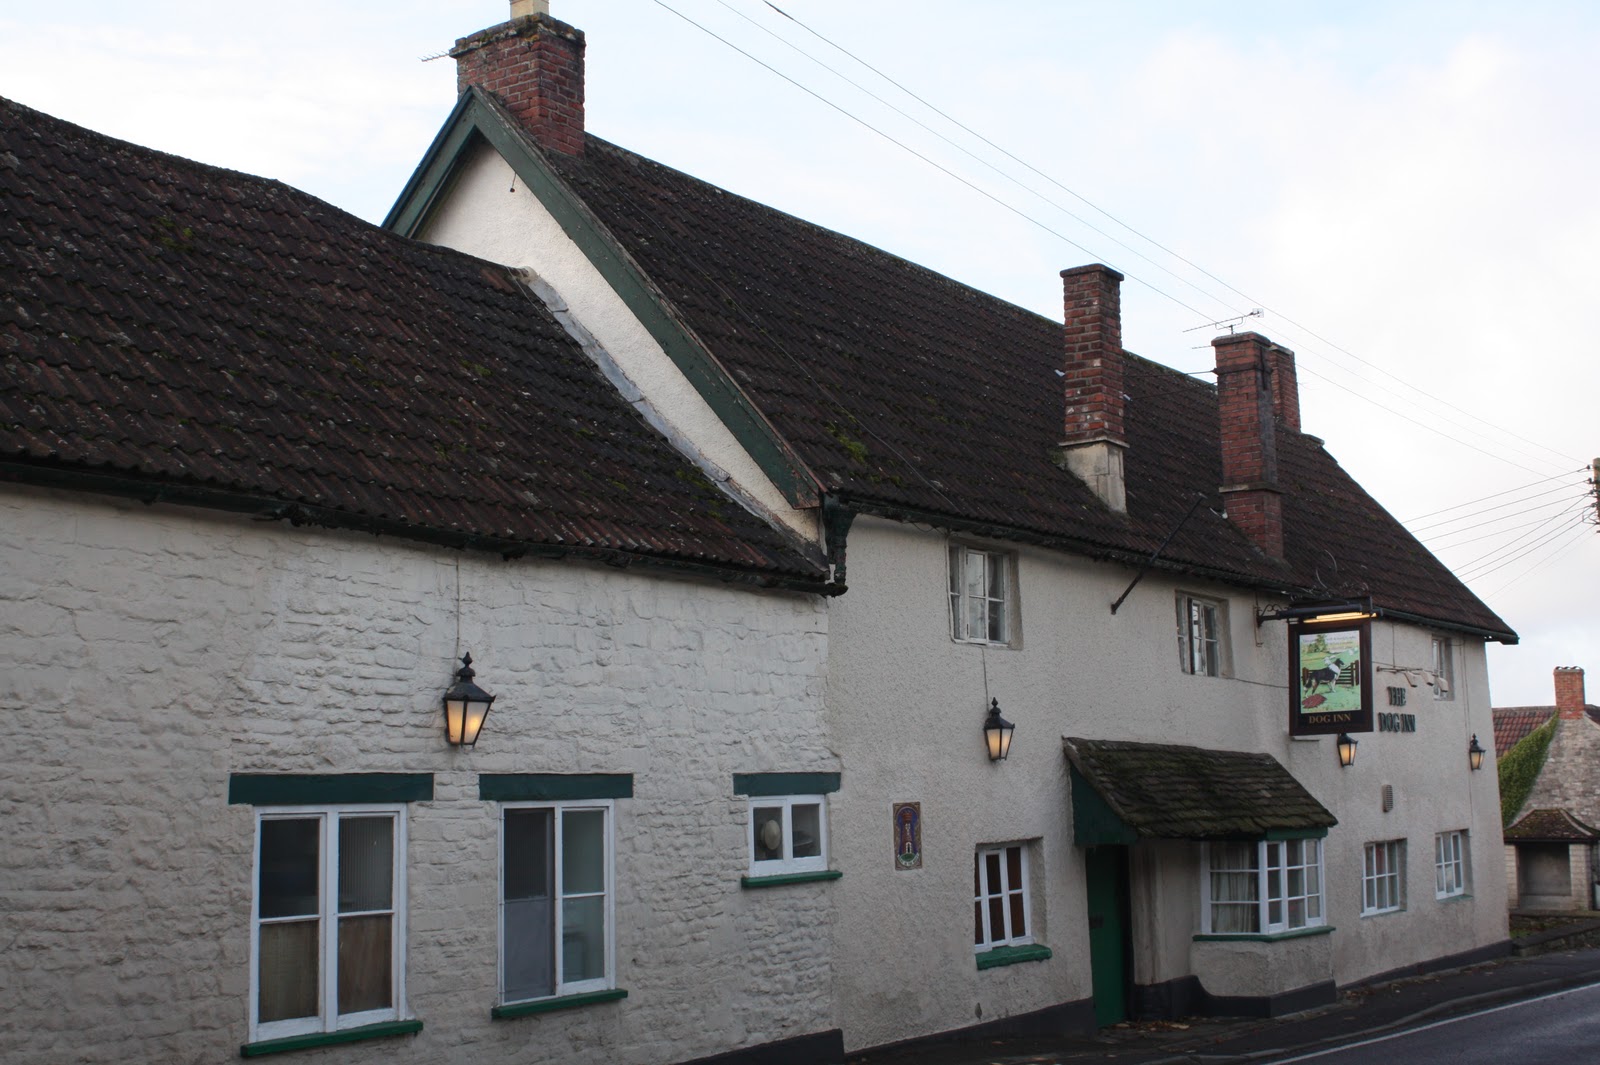 The Dog Inn, Old Sodbury